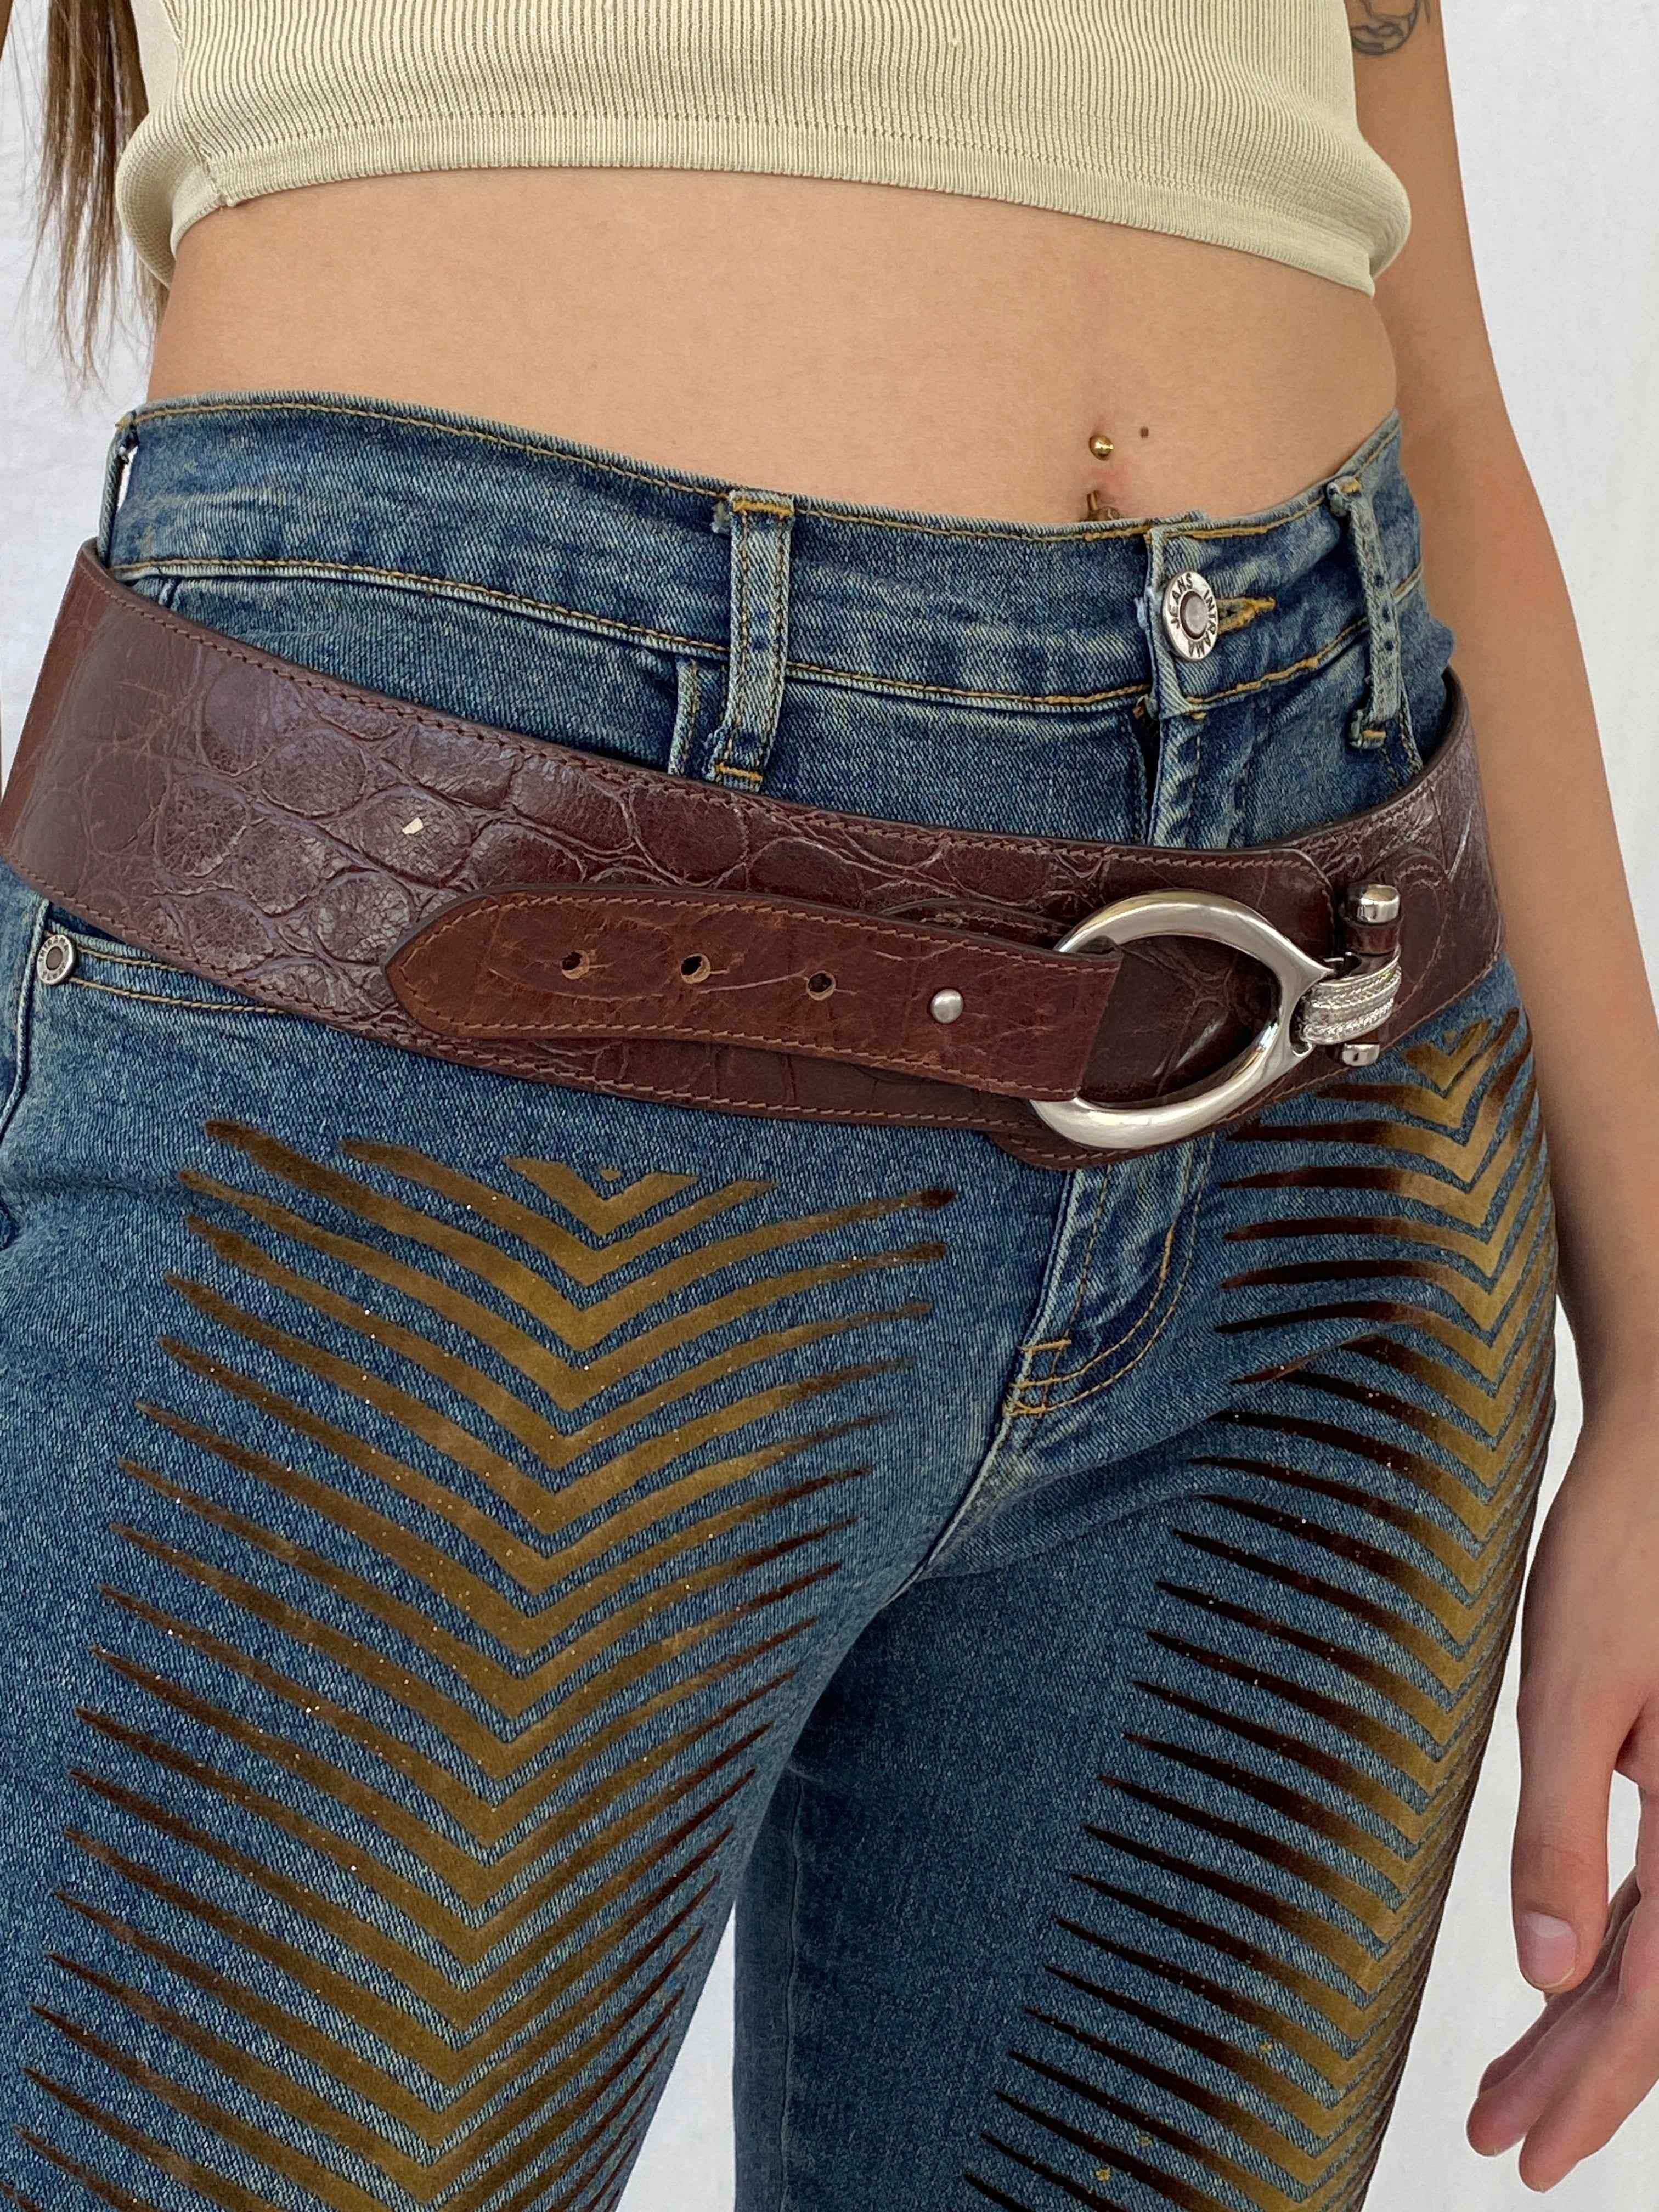 90s/Y2K Dolce Donna Italy Brown Genuine Leather Belt - Balagan Vintage Belt 00s, 90s, belt, genuine leather, Mira, NEW IN